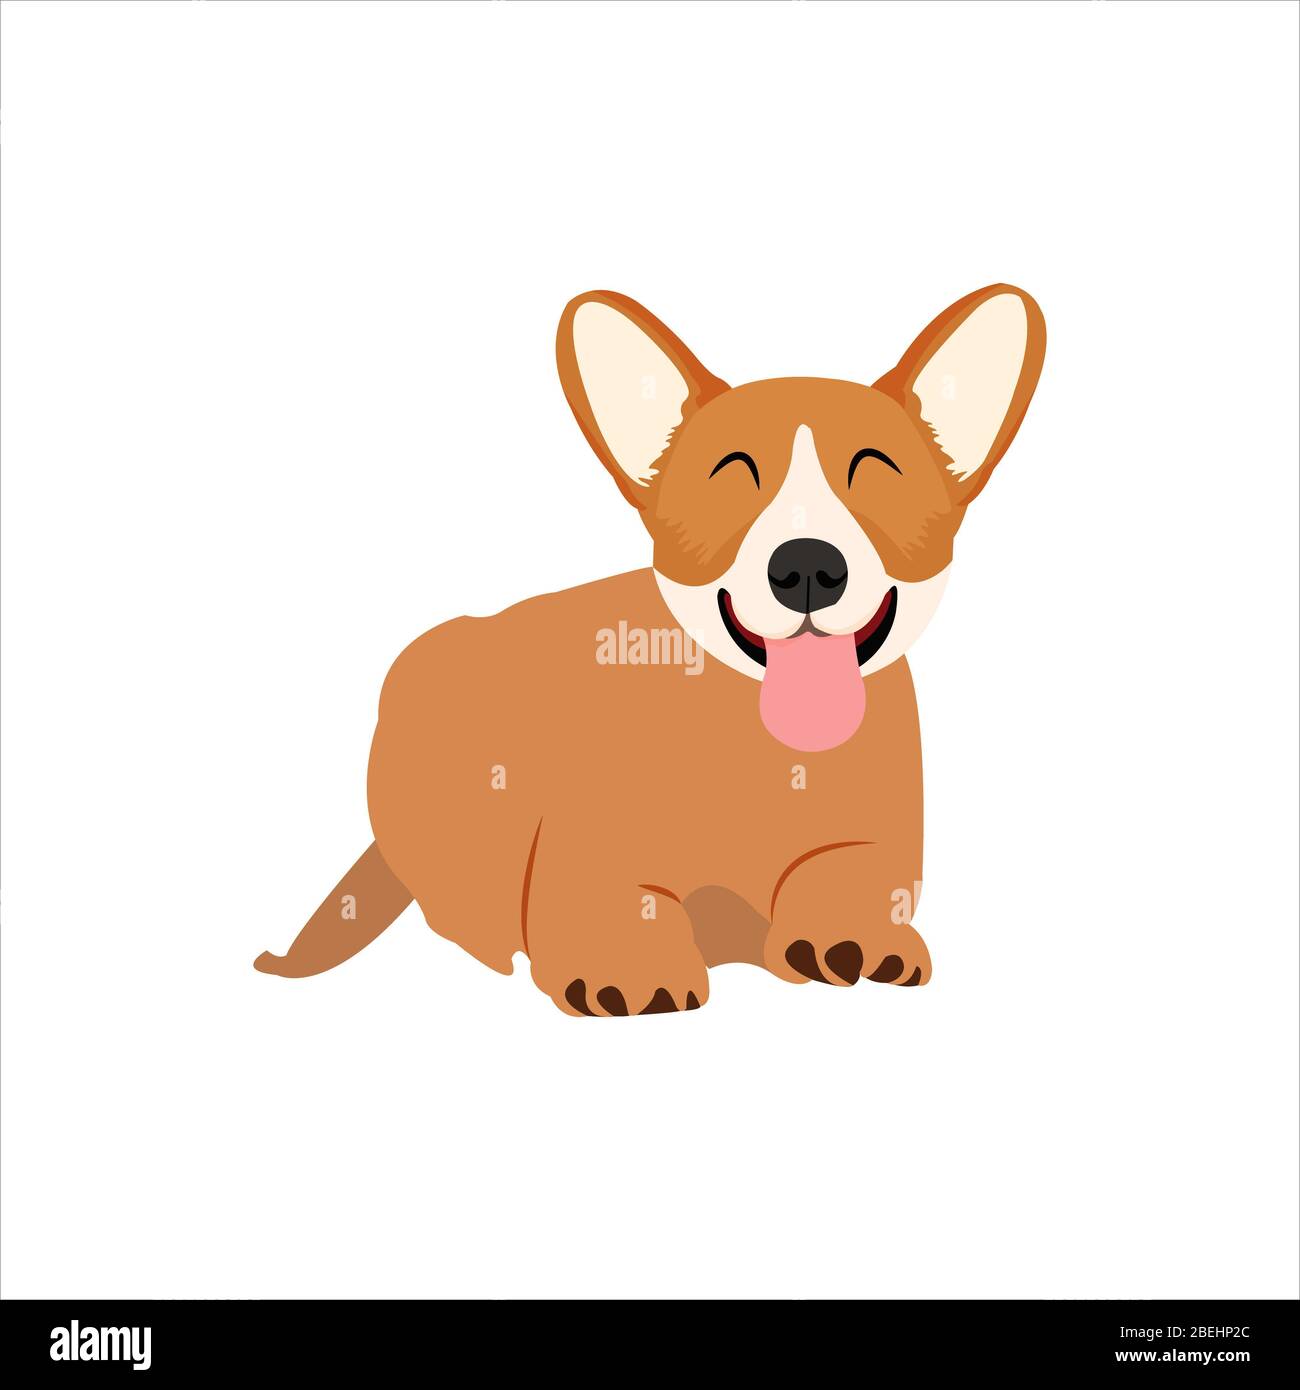 Lustige Hund Clip Art Illustration mit Cartoon-Stil Stockfotografie - Alamy